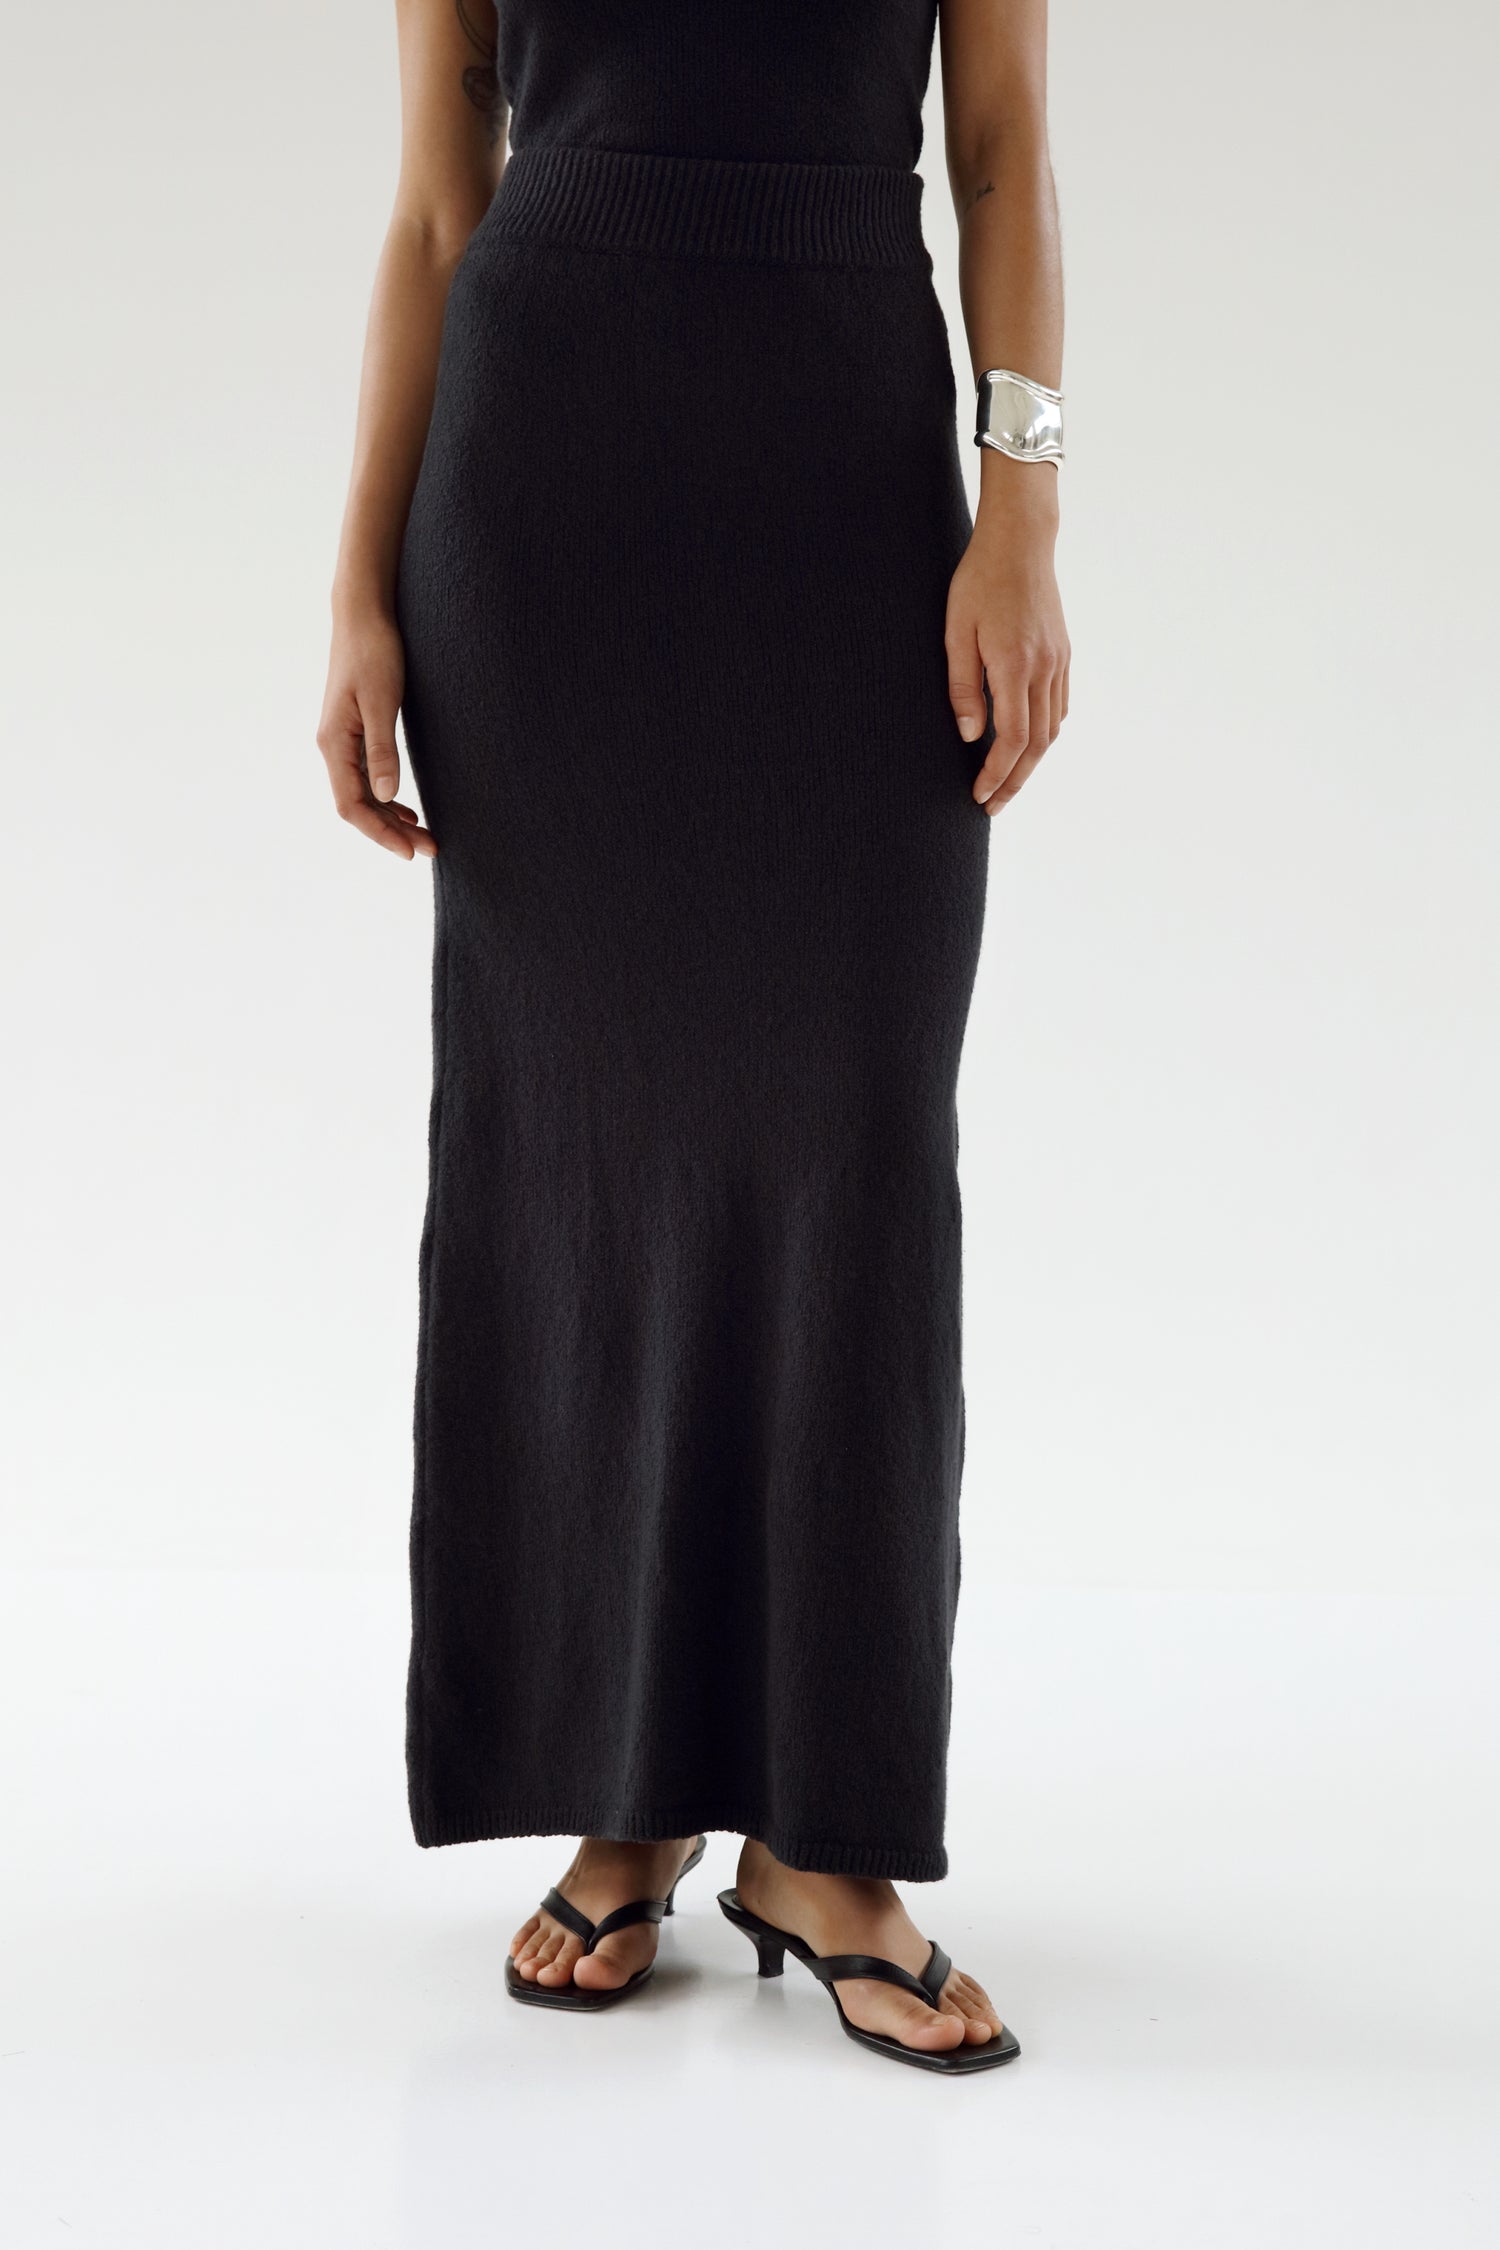 Umi Skirt, black